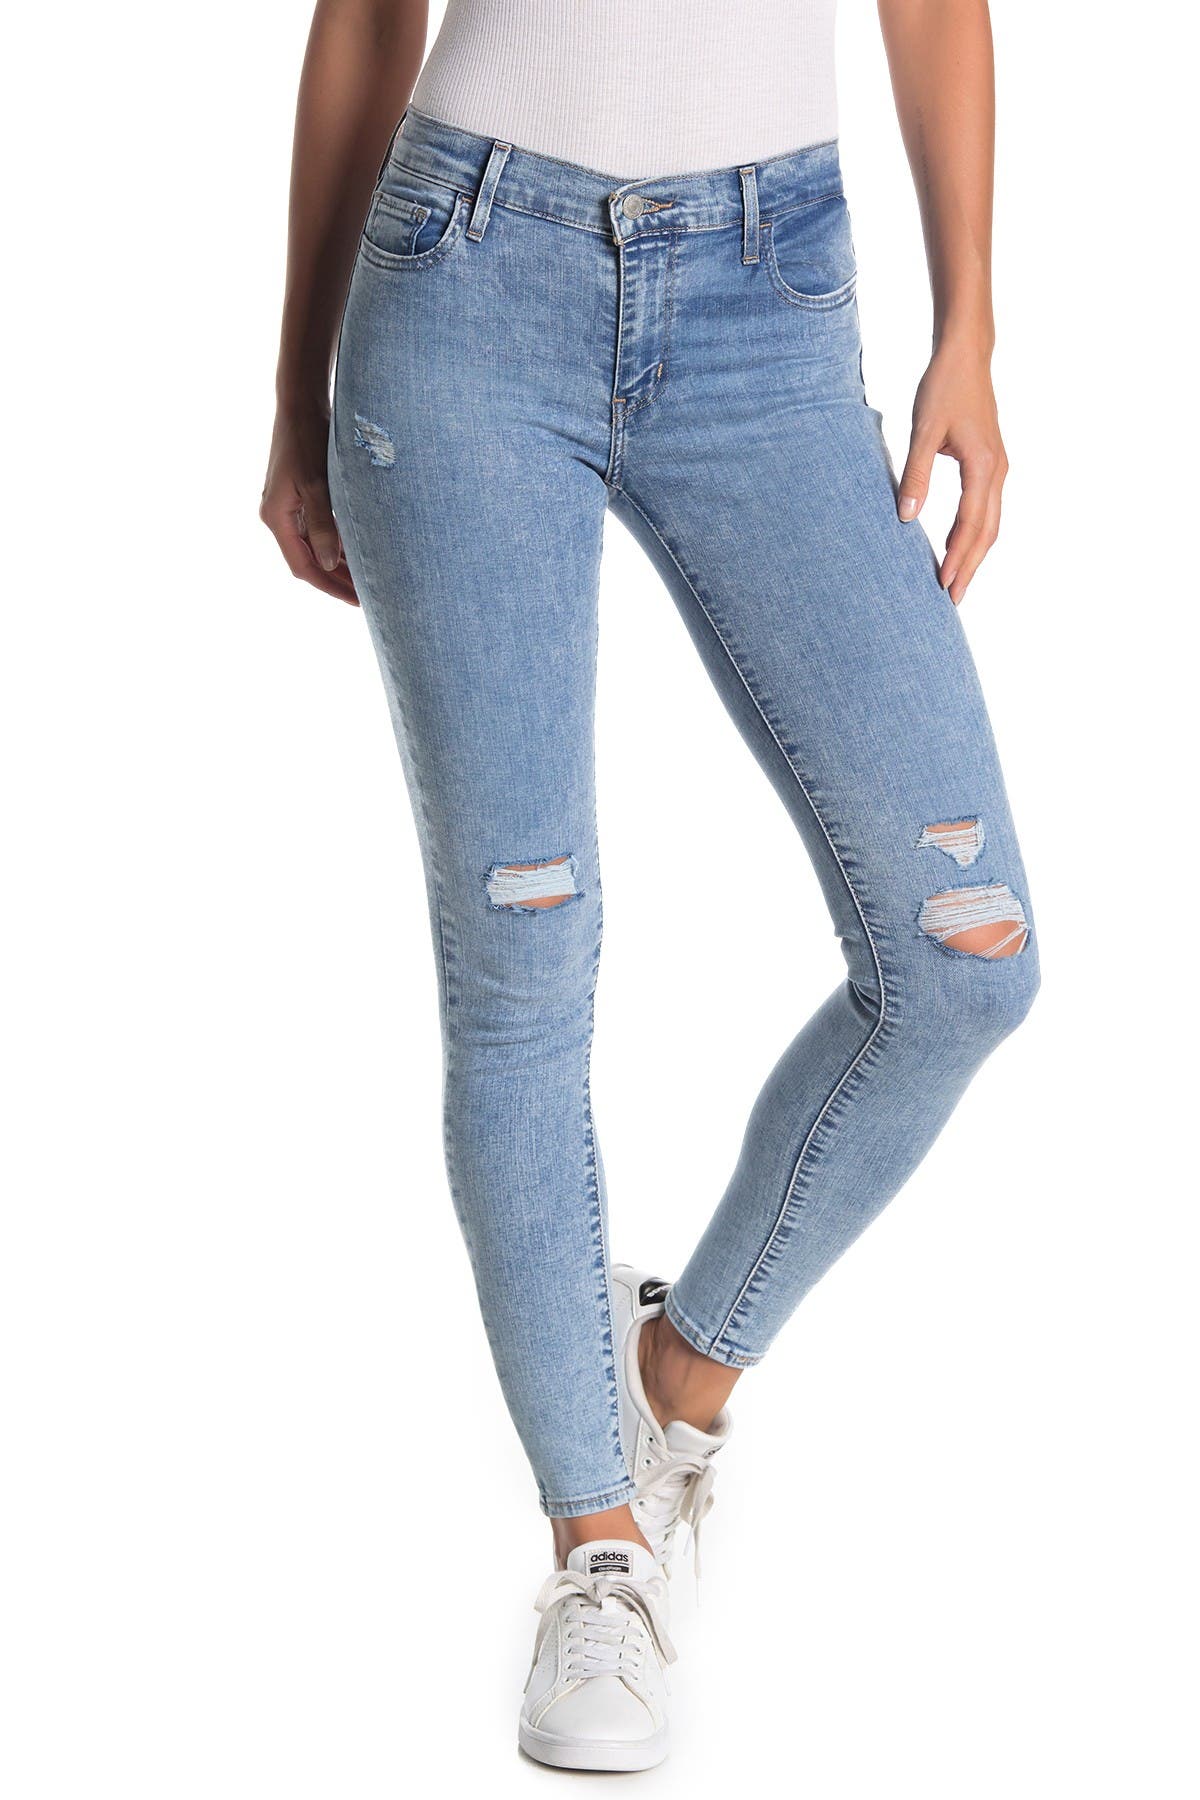 levi's 710 skinny jeans